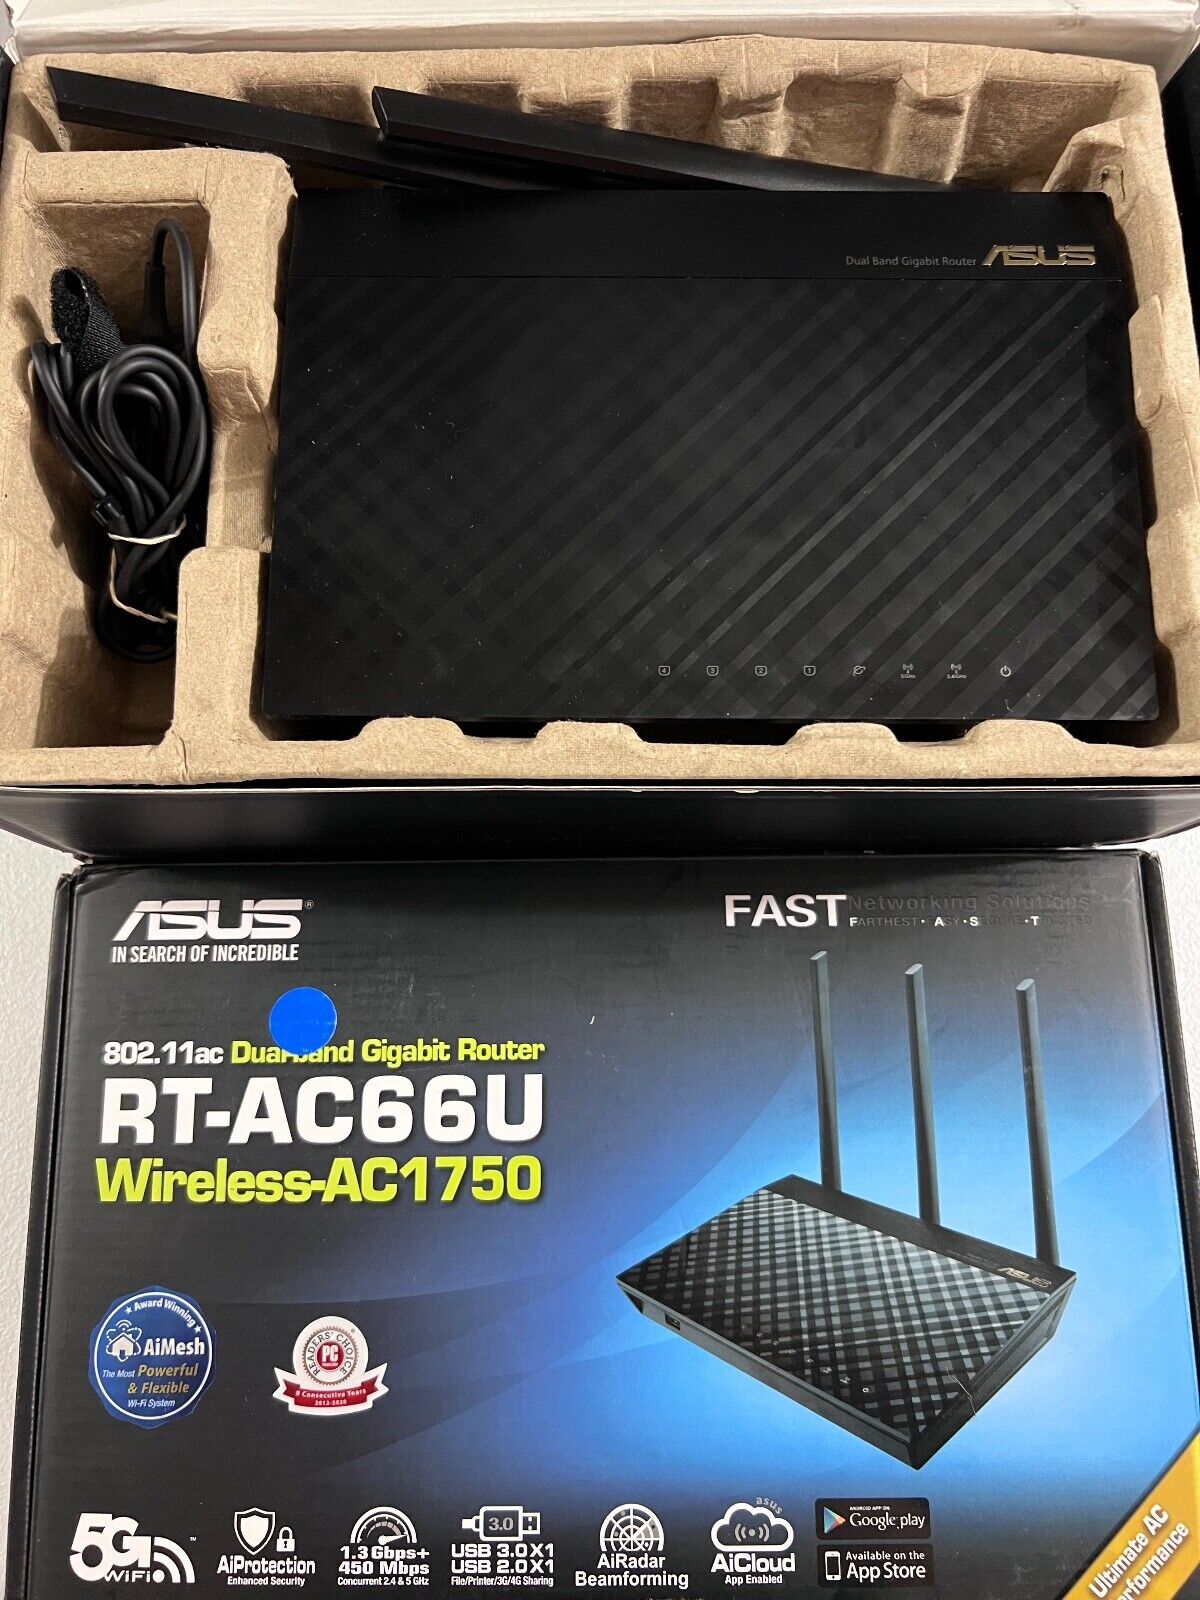 ASUS RT-AC66U Dual Band Gigabit Wireless Router